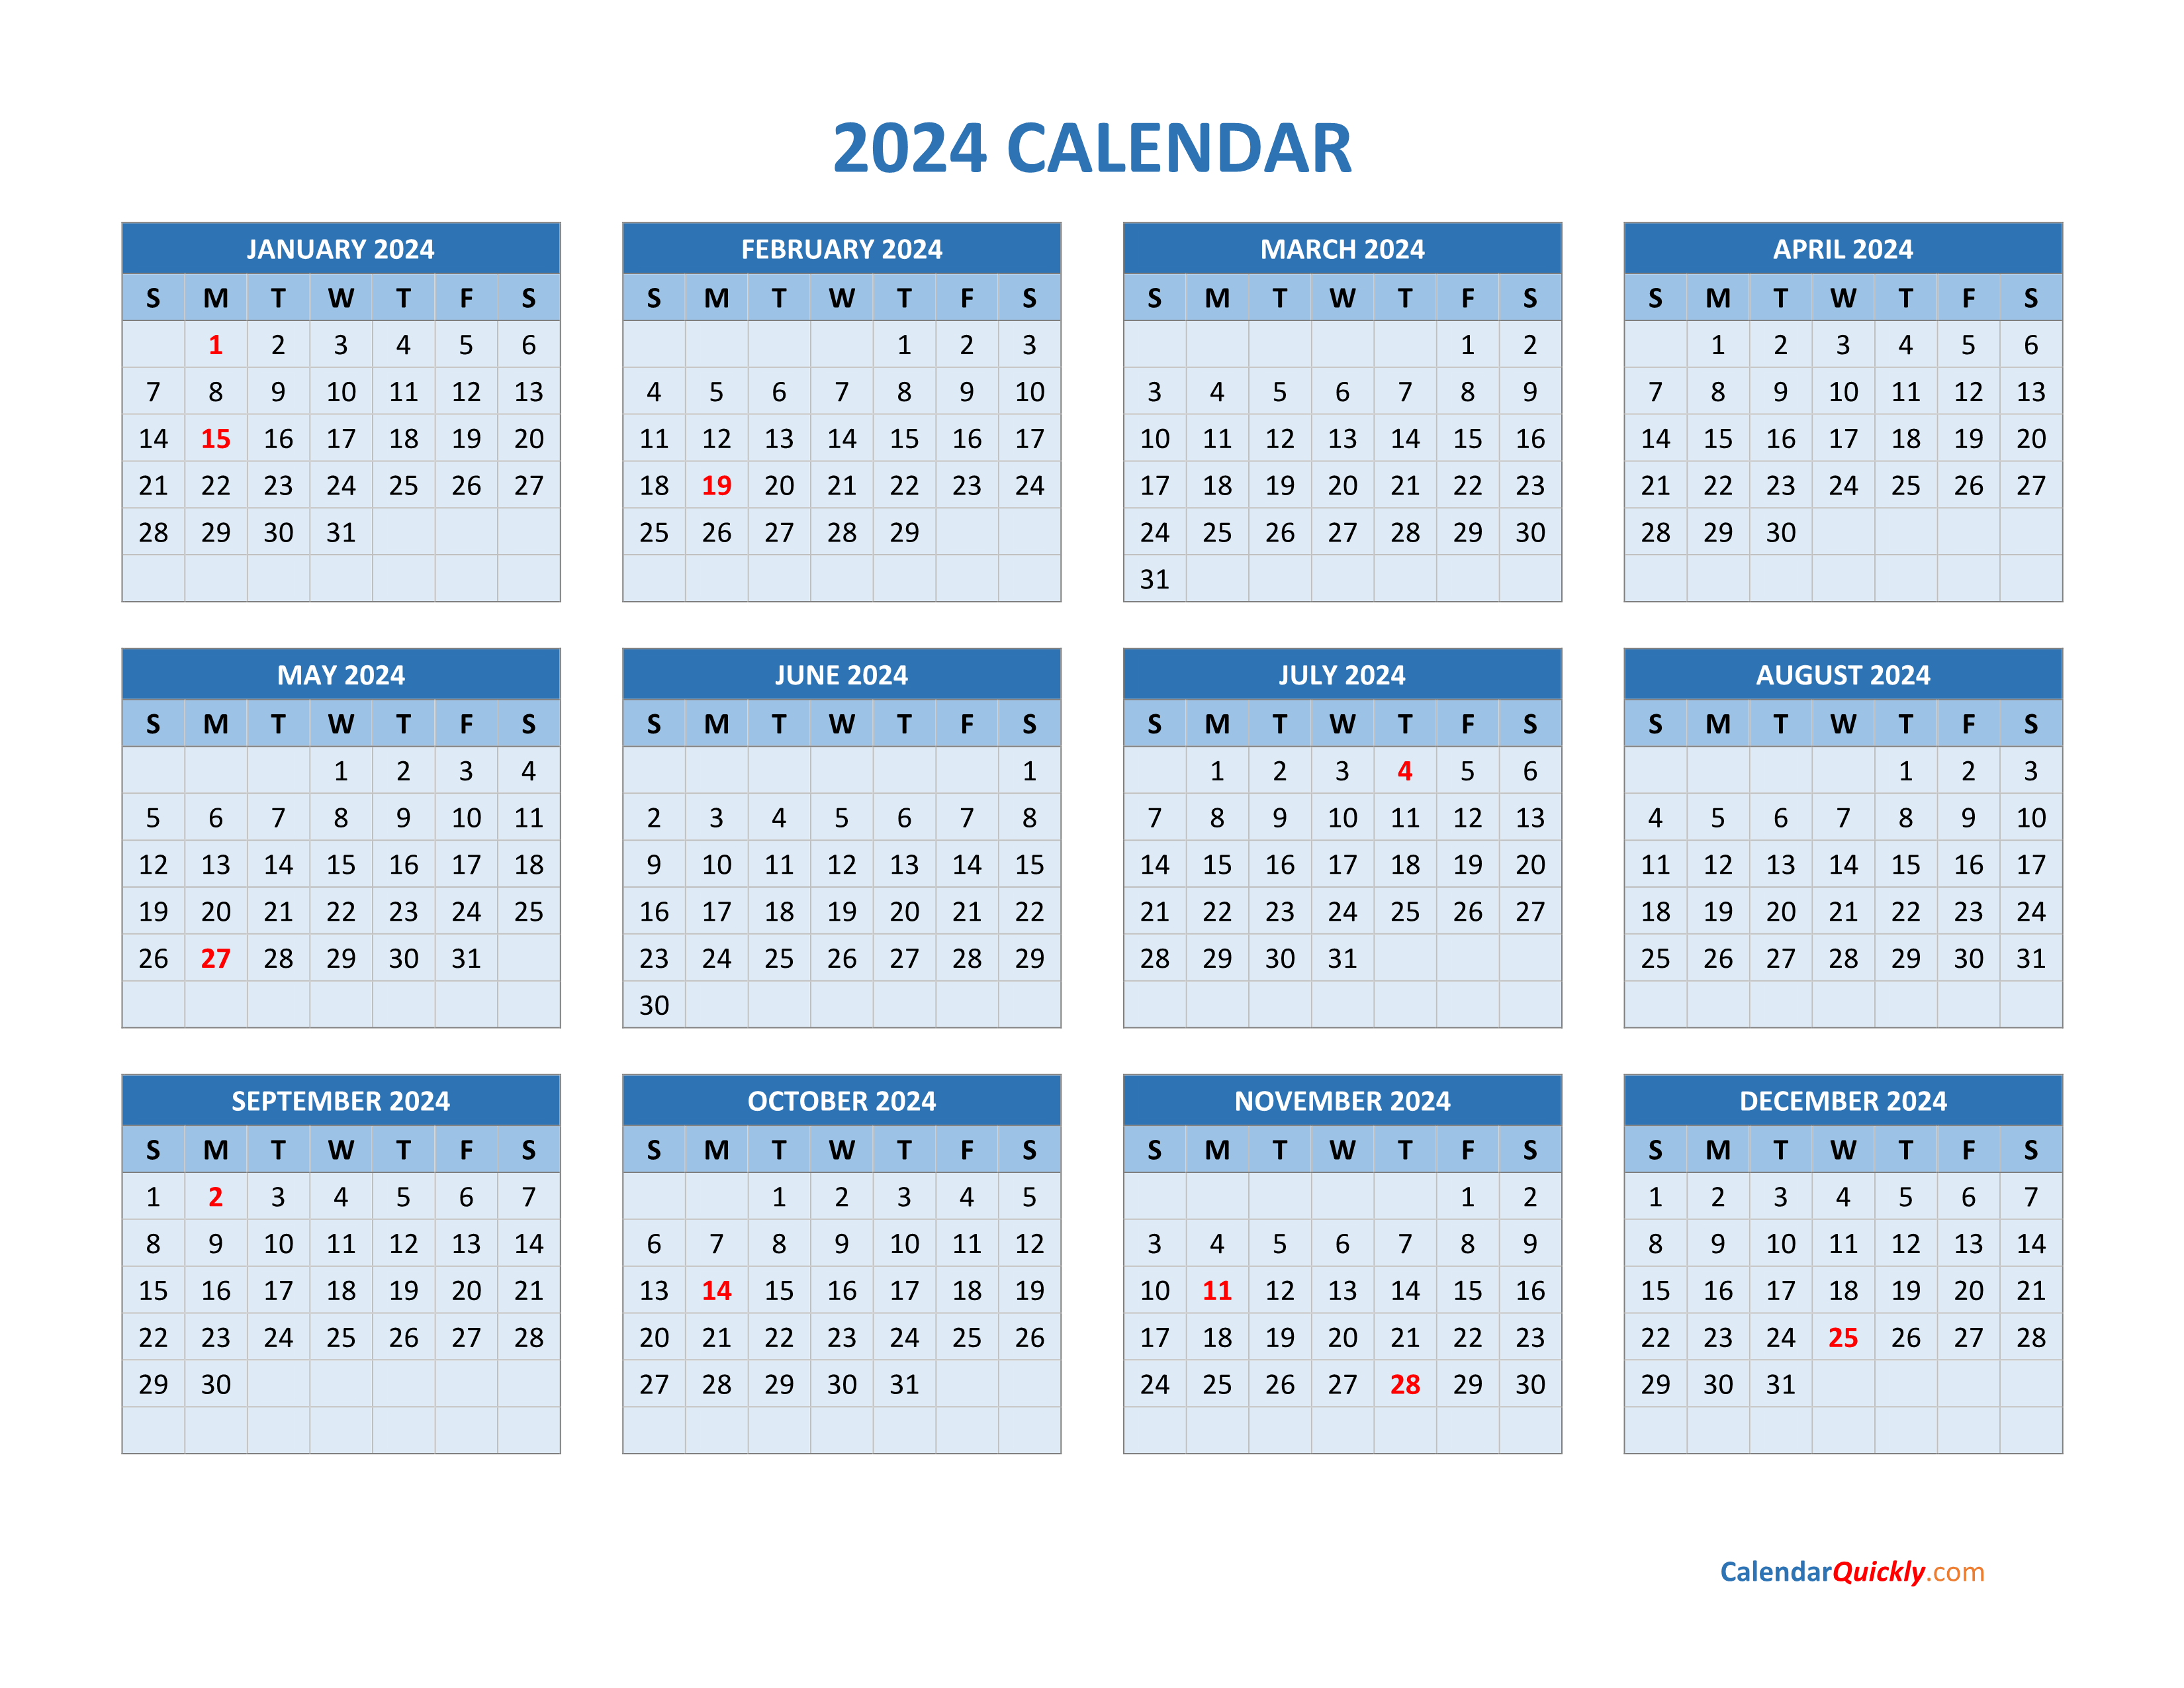 Calendar 2024 Cdr File Free Download Easy To Use Calendar App 2024 - Free Printable 12 Month Calendar 2024